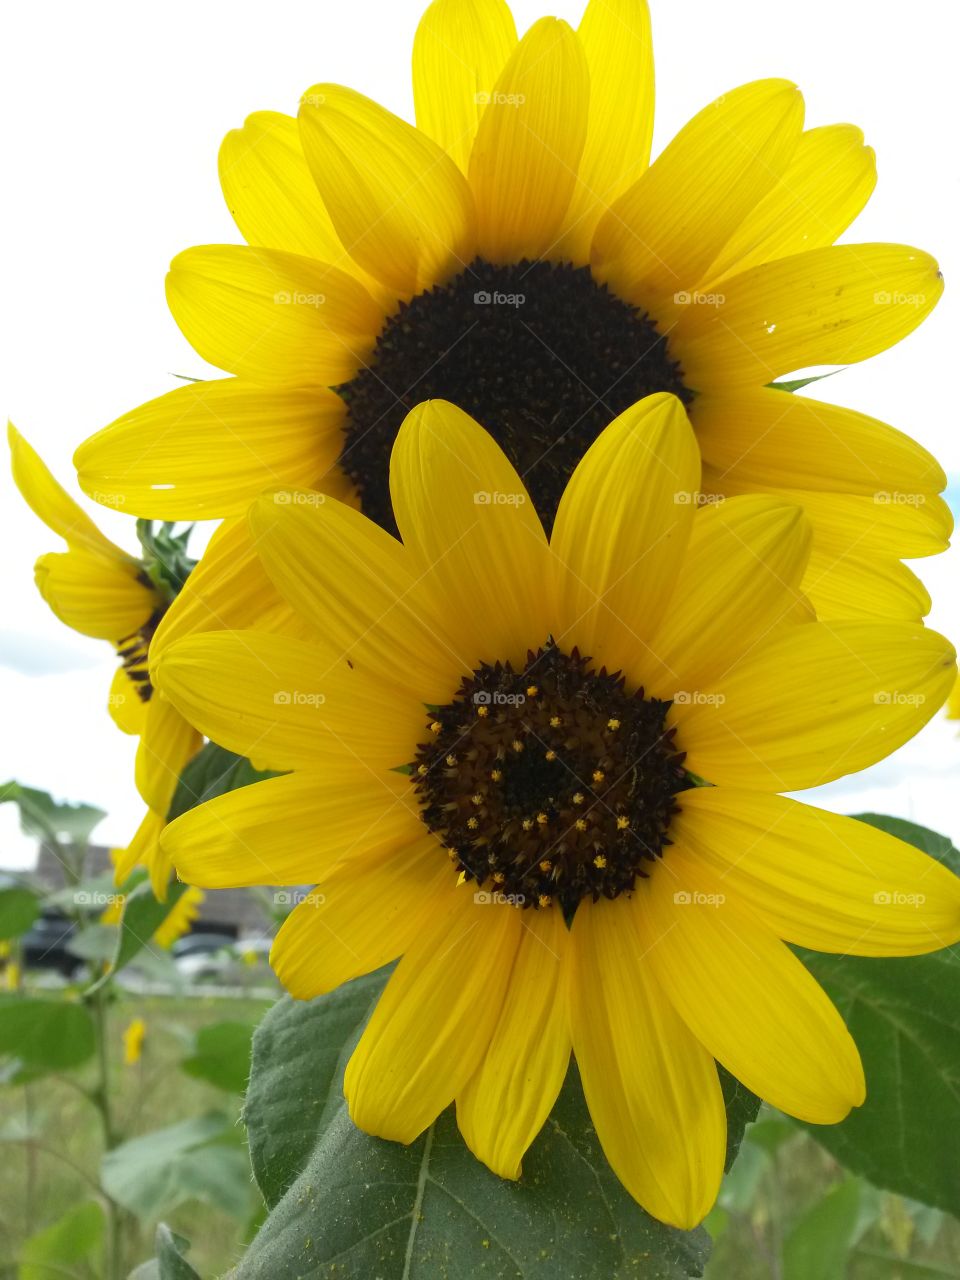 providence sunflowers